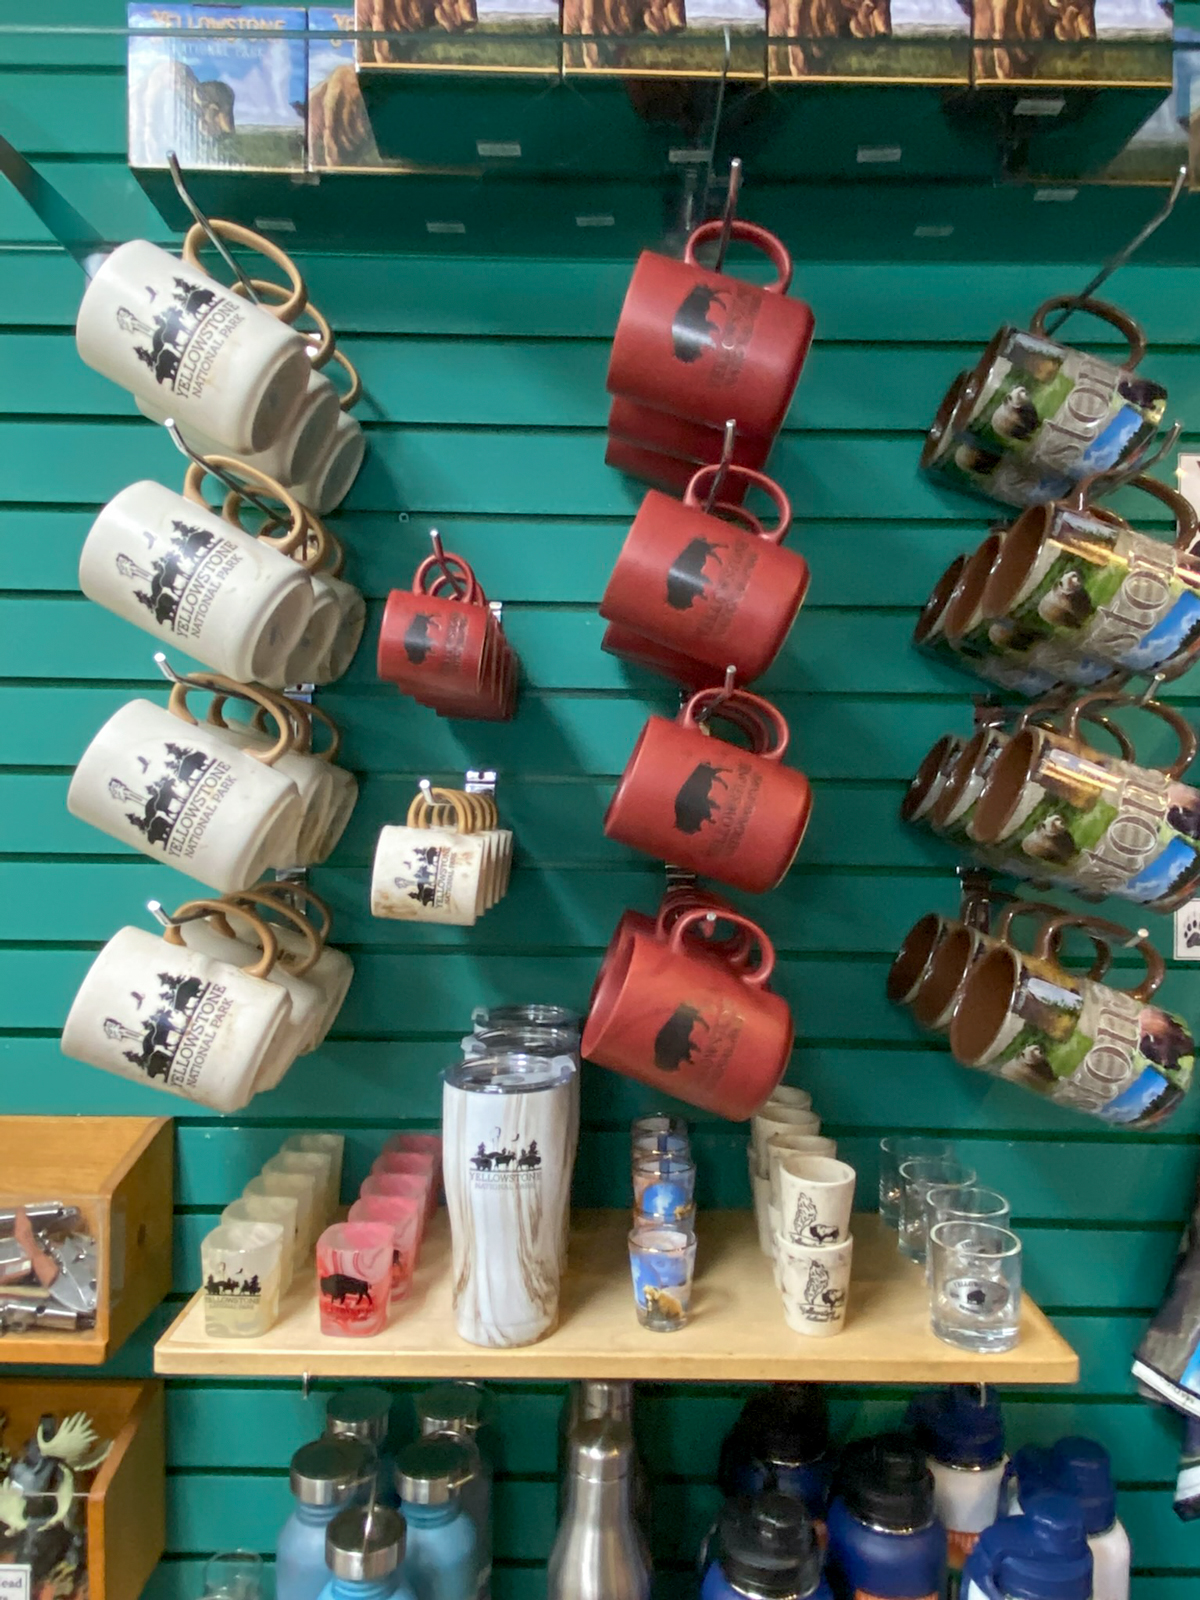 Yellowstone mugs and glasses at Grant Village Gift Shop